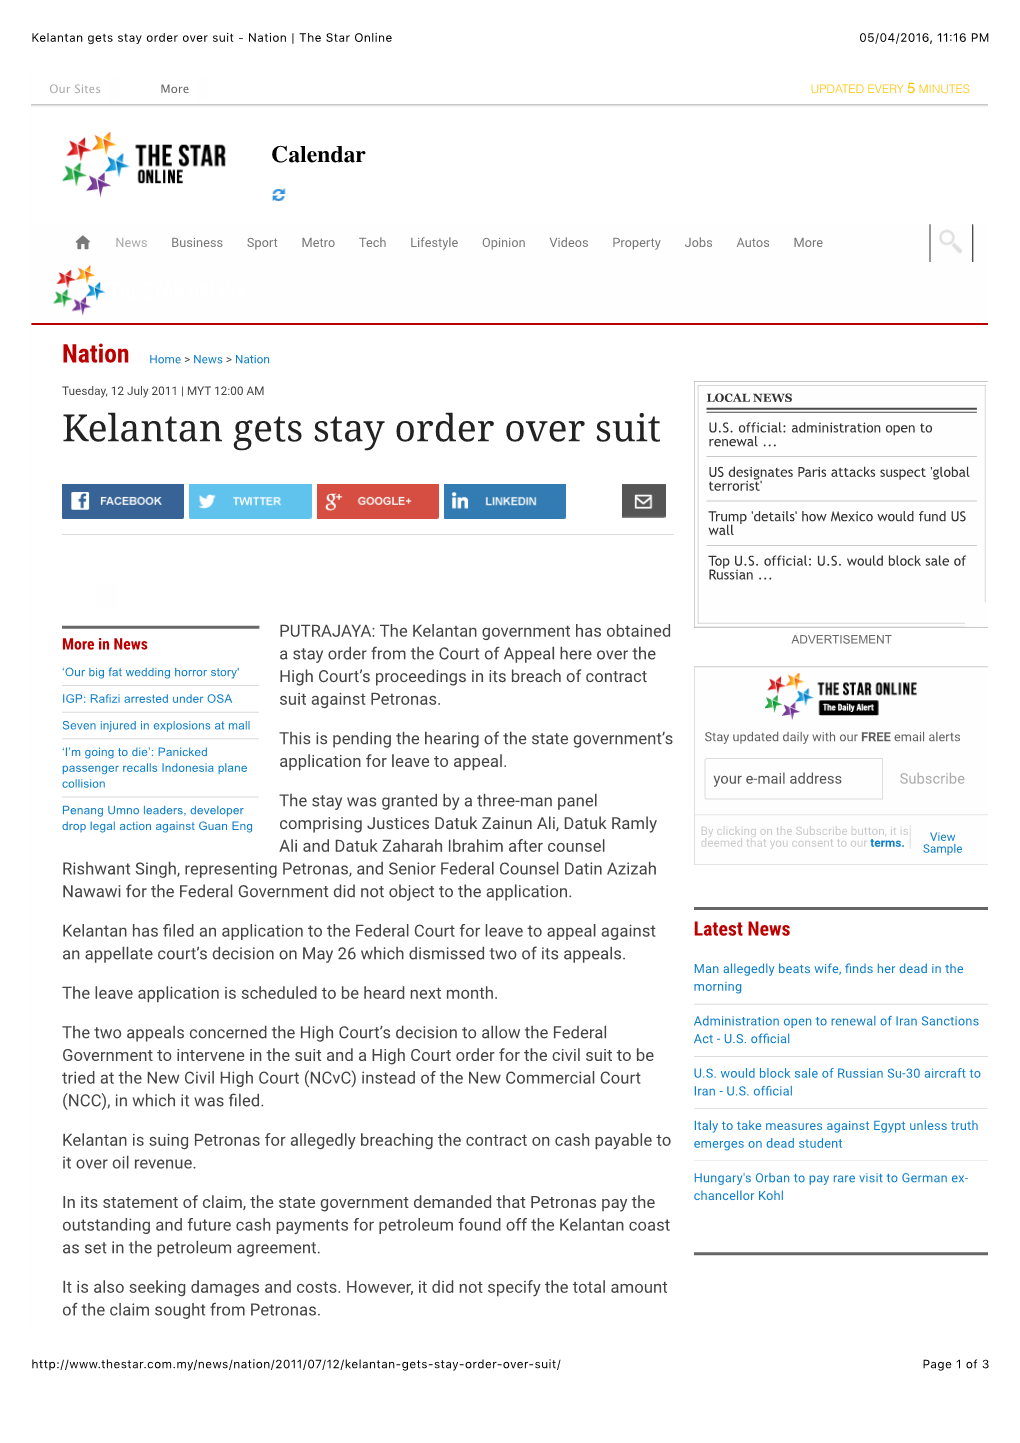 Kelantan Gets Stay Order Over Suit - Nation | the Star Online 05/04/2016, 11:16 PM